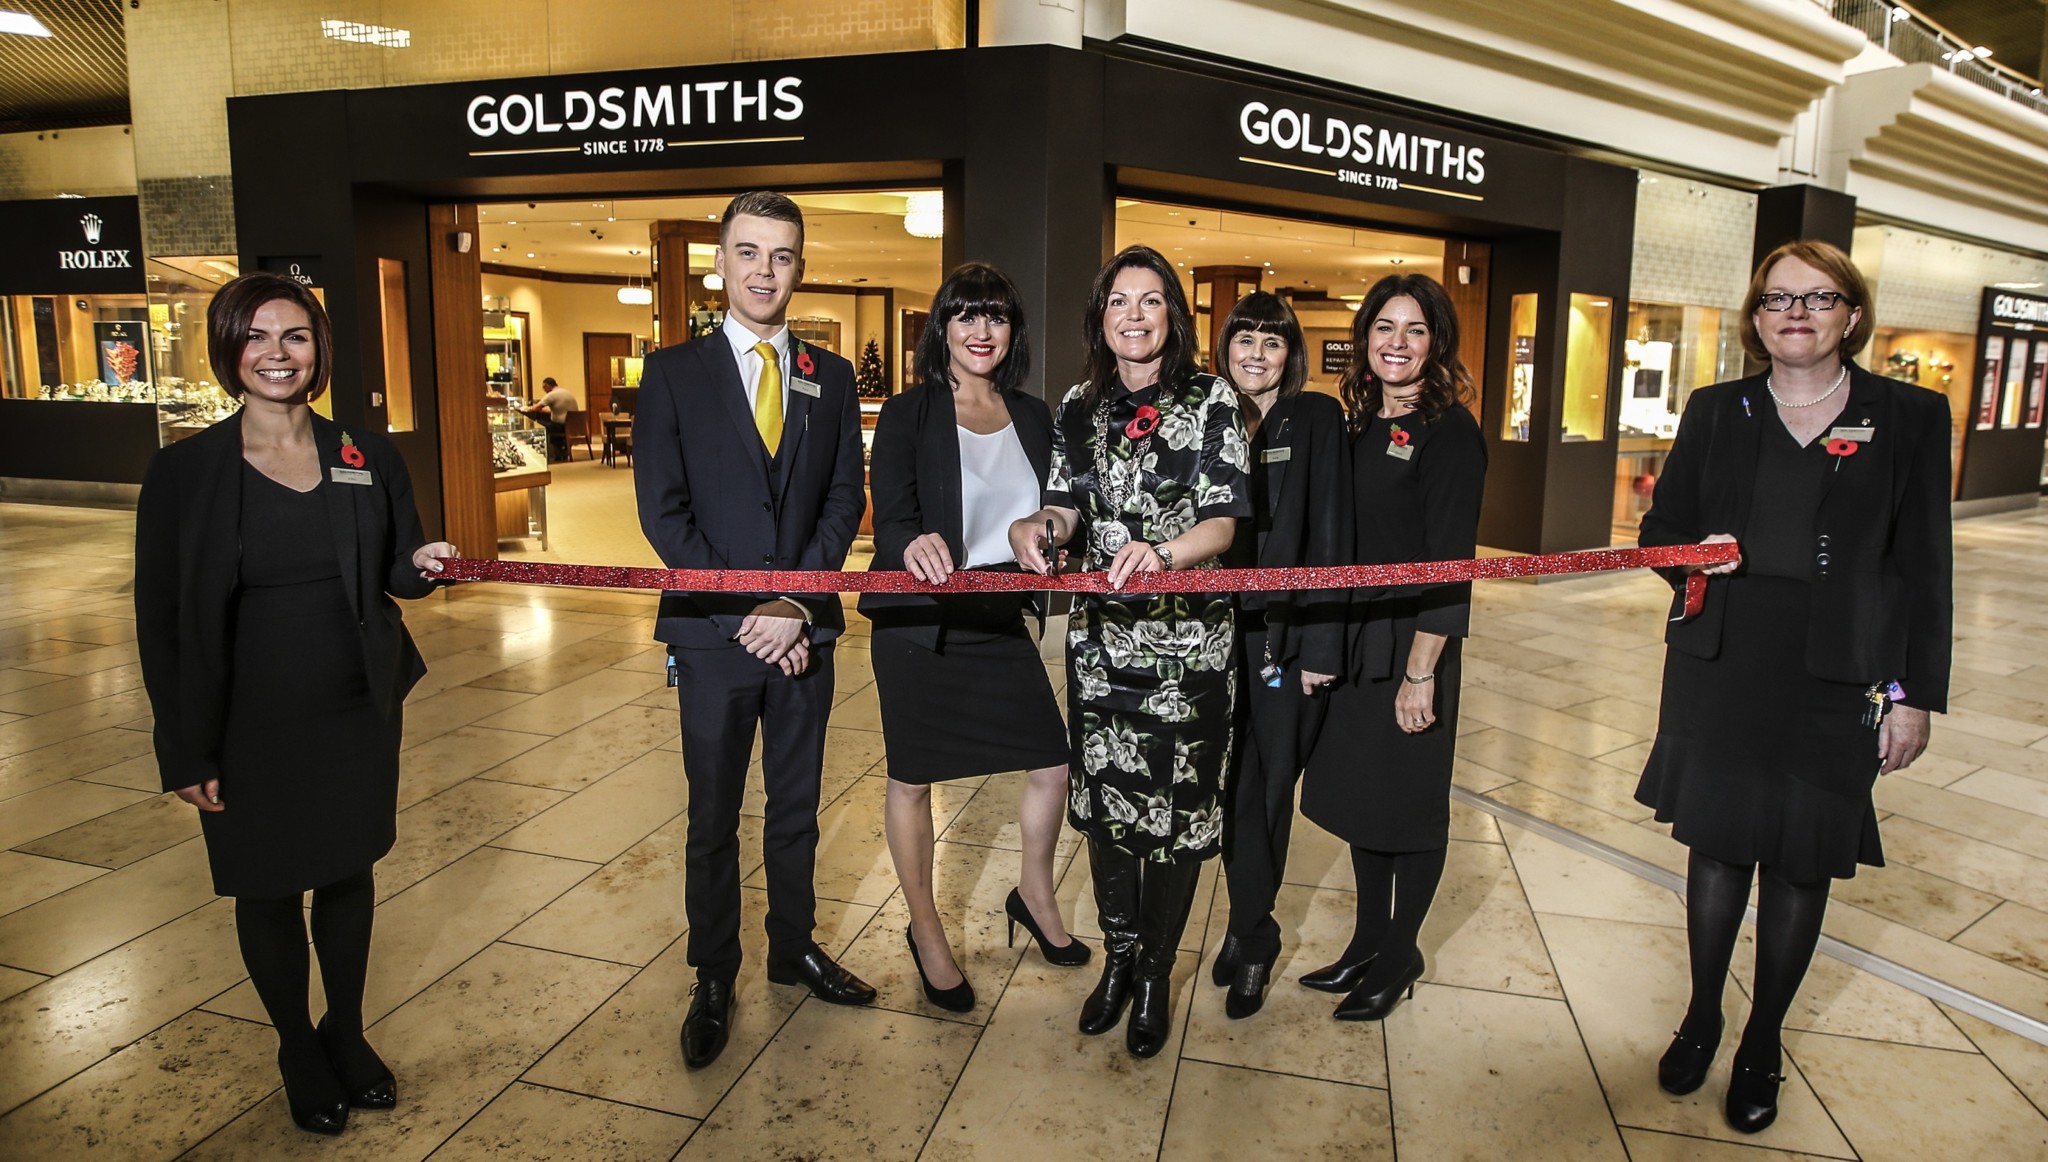 Goldsmiths intu metrocentre unveils new showroom and brands